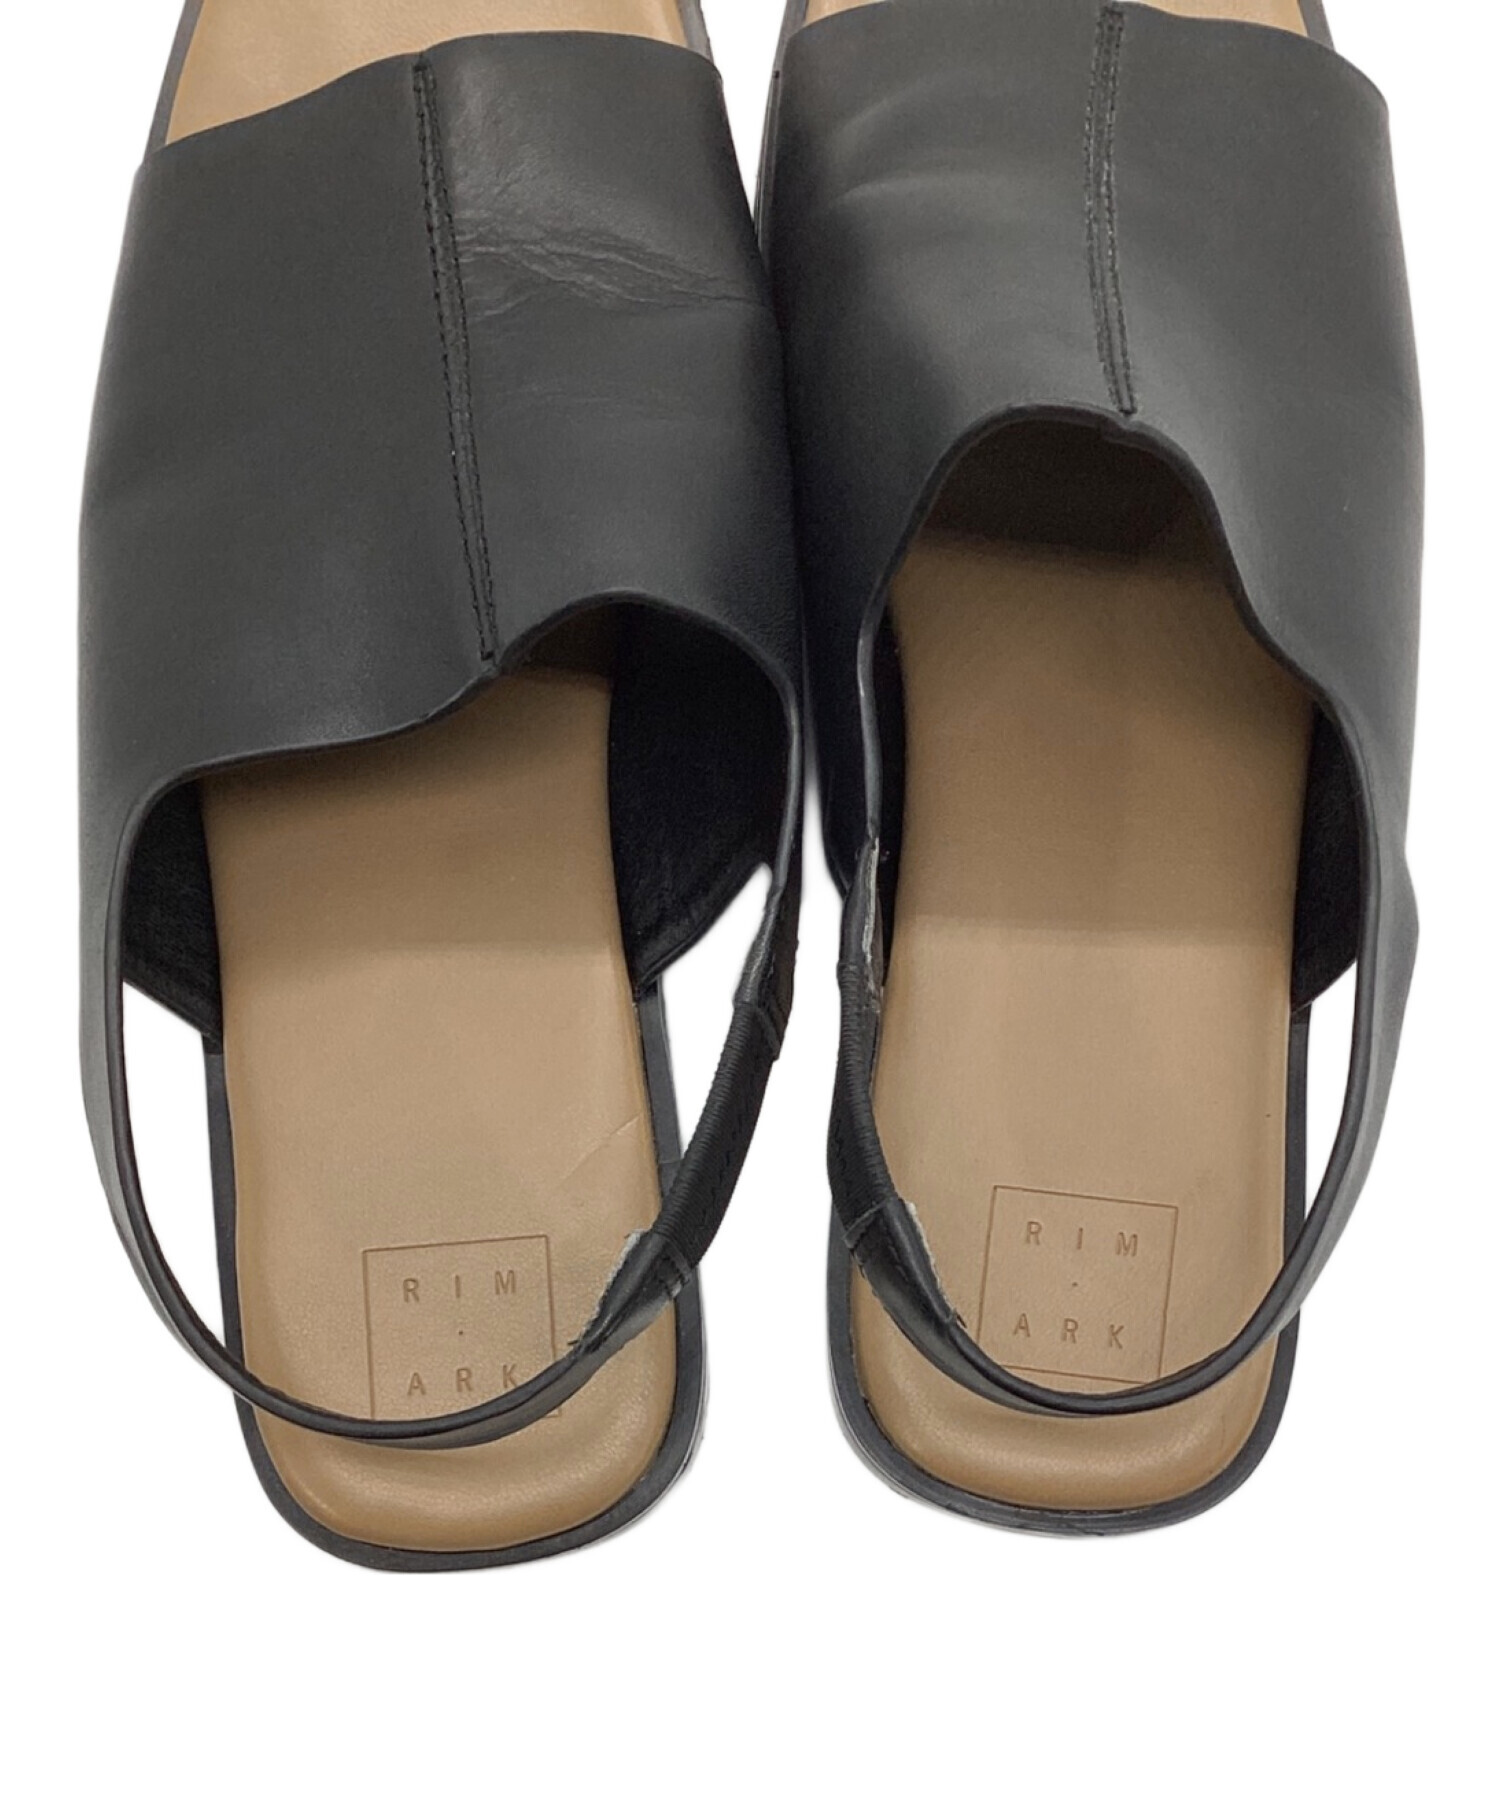 RIM.ARK (リムアーク) Square toe covered sandal ブラック サイズ:38